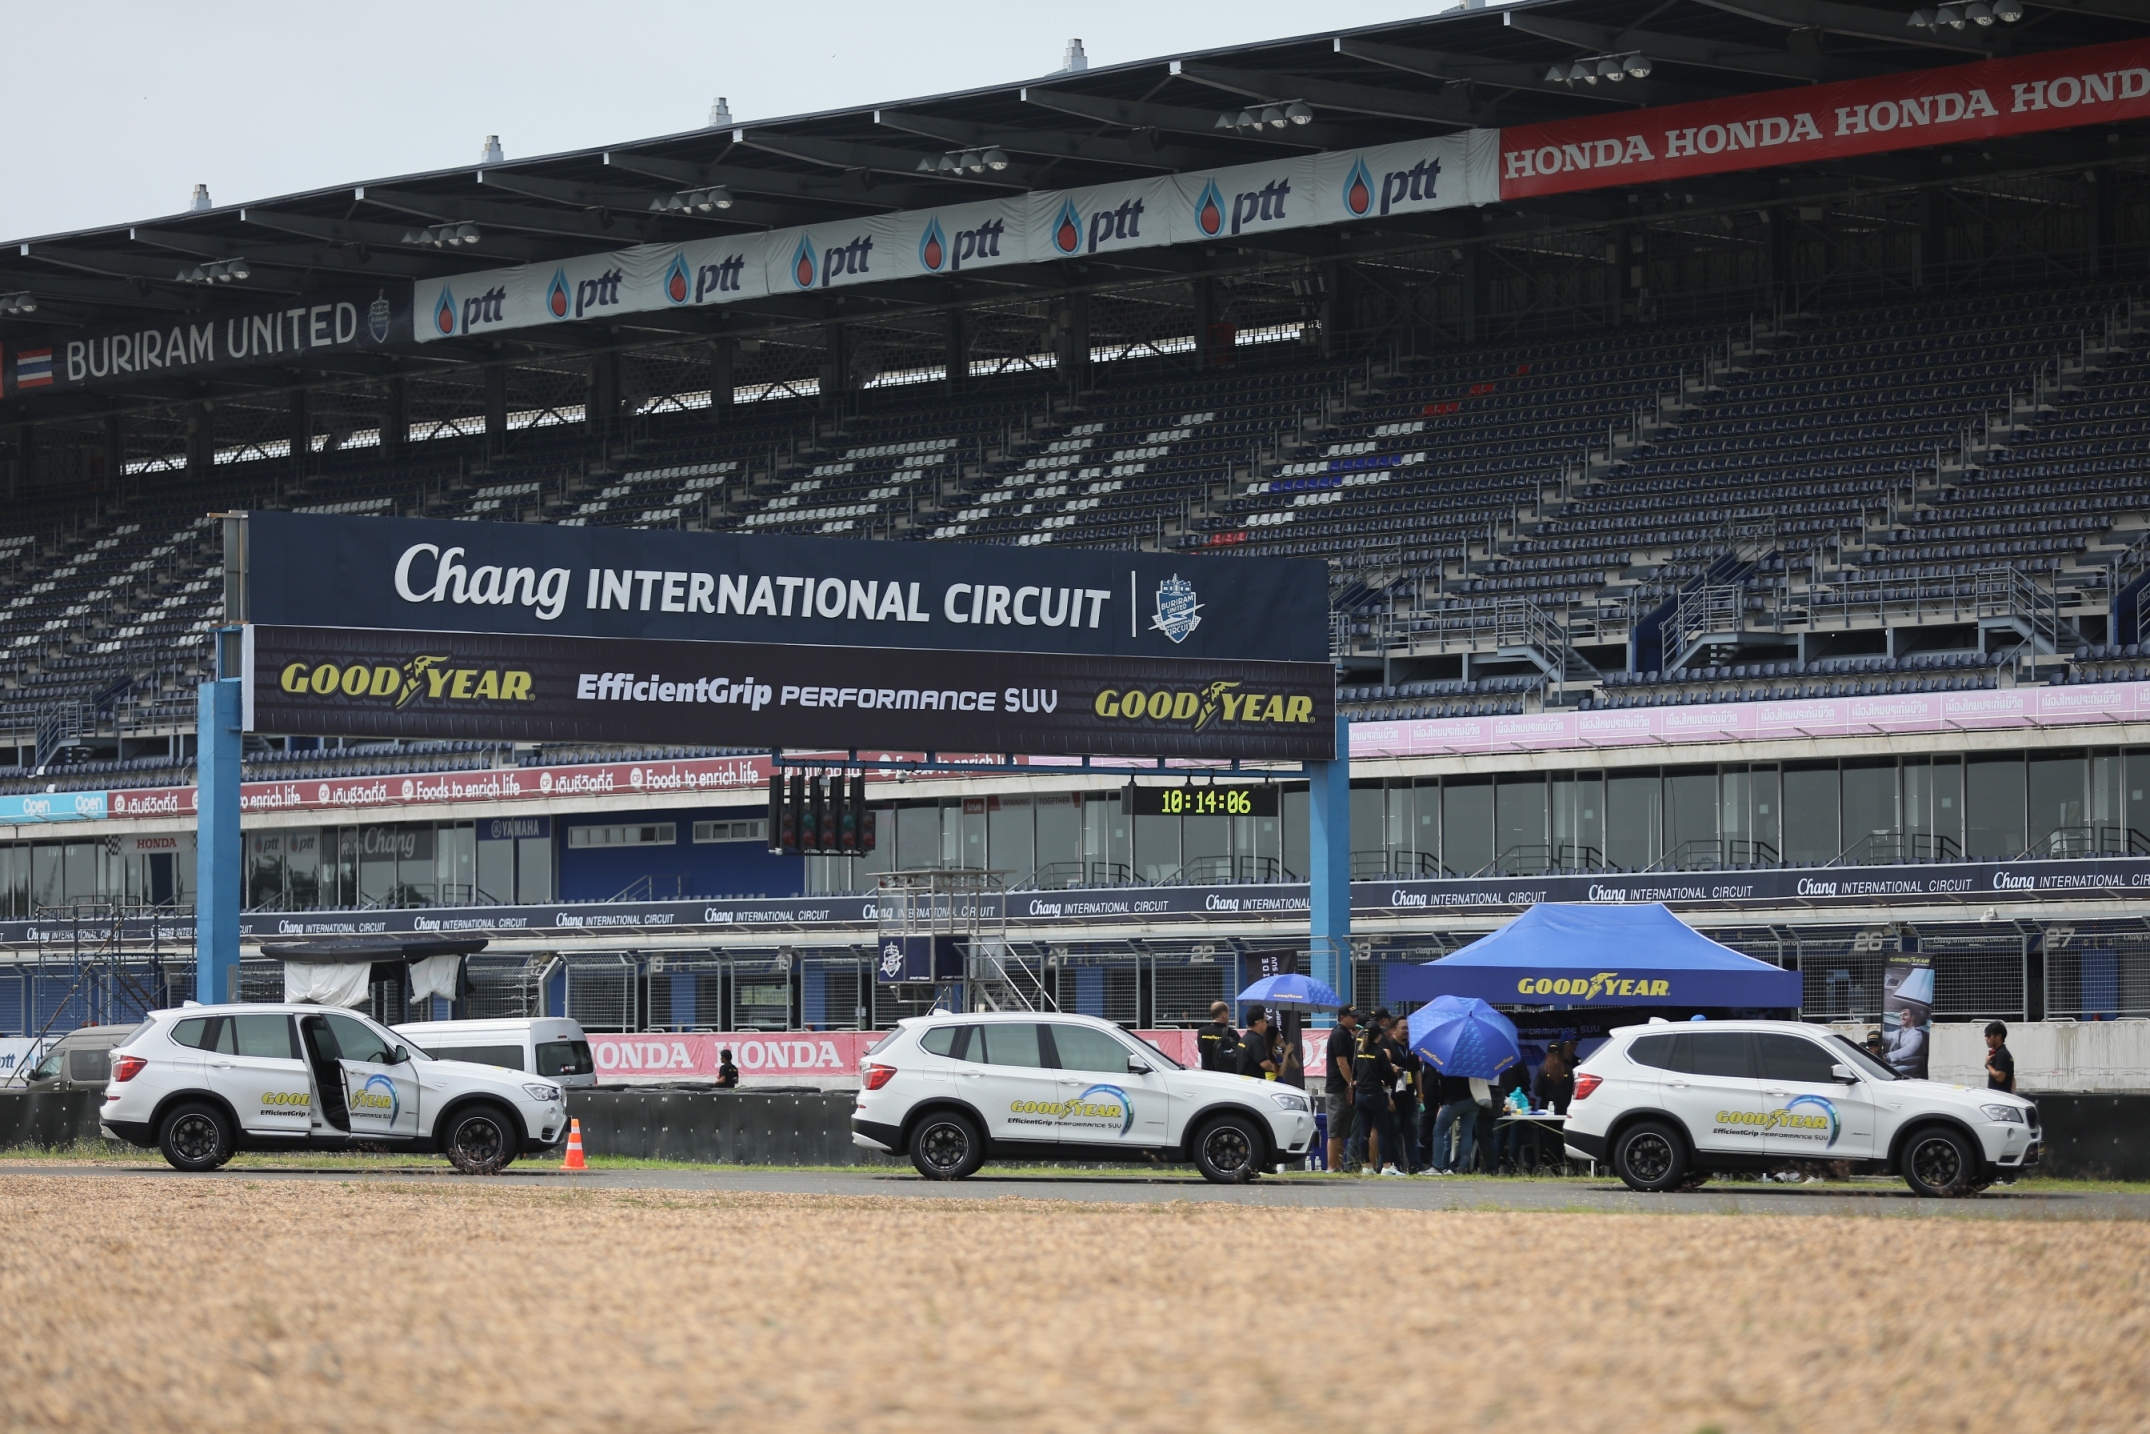 2 Goodyear於八月初在泰國布里蘭(Chang International Circuit, Buriram)舉辦休旅車胎Efficientgrip Performance SUV亞太區新胎發表會